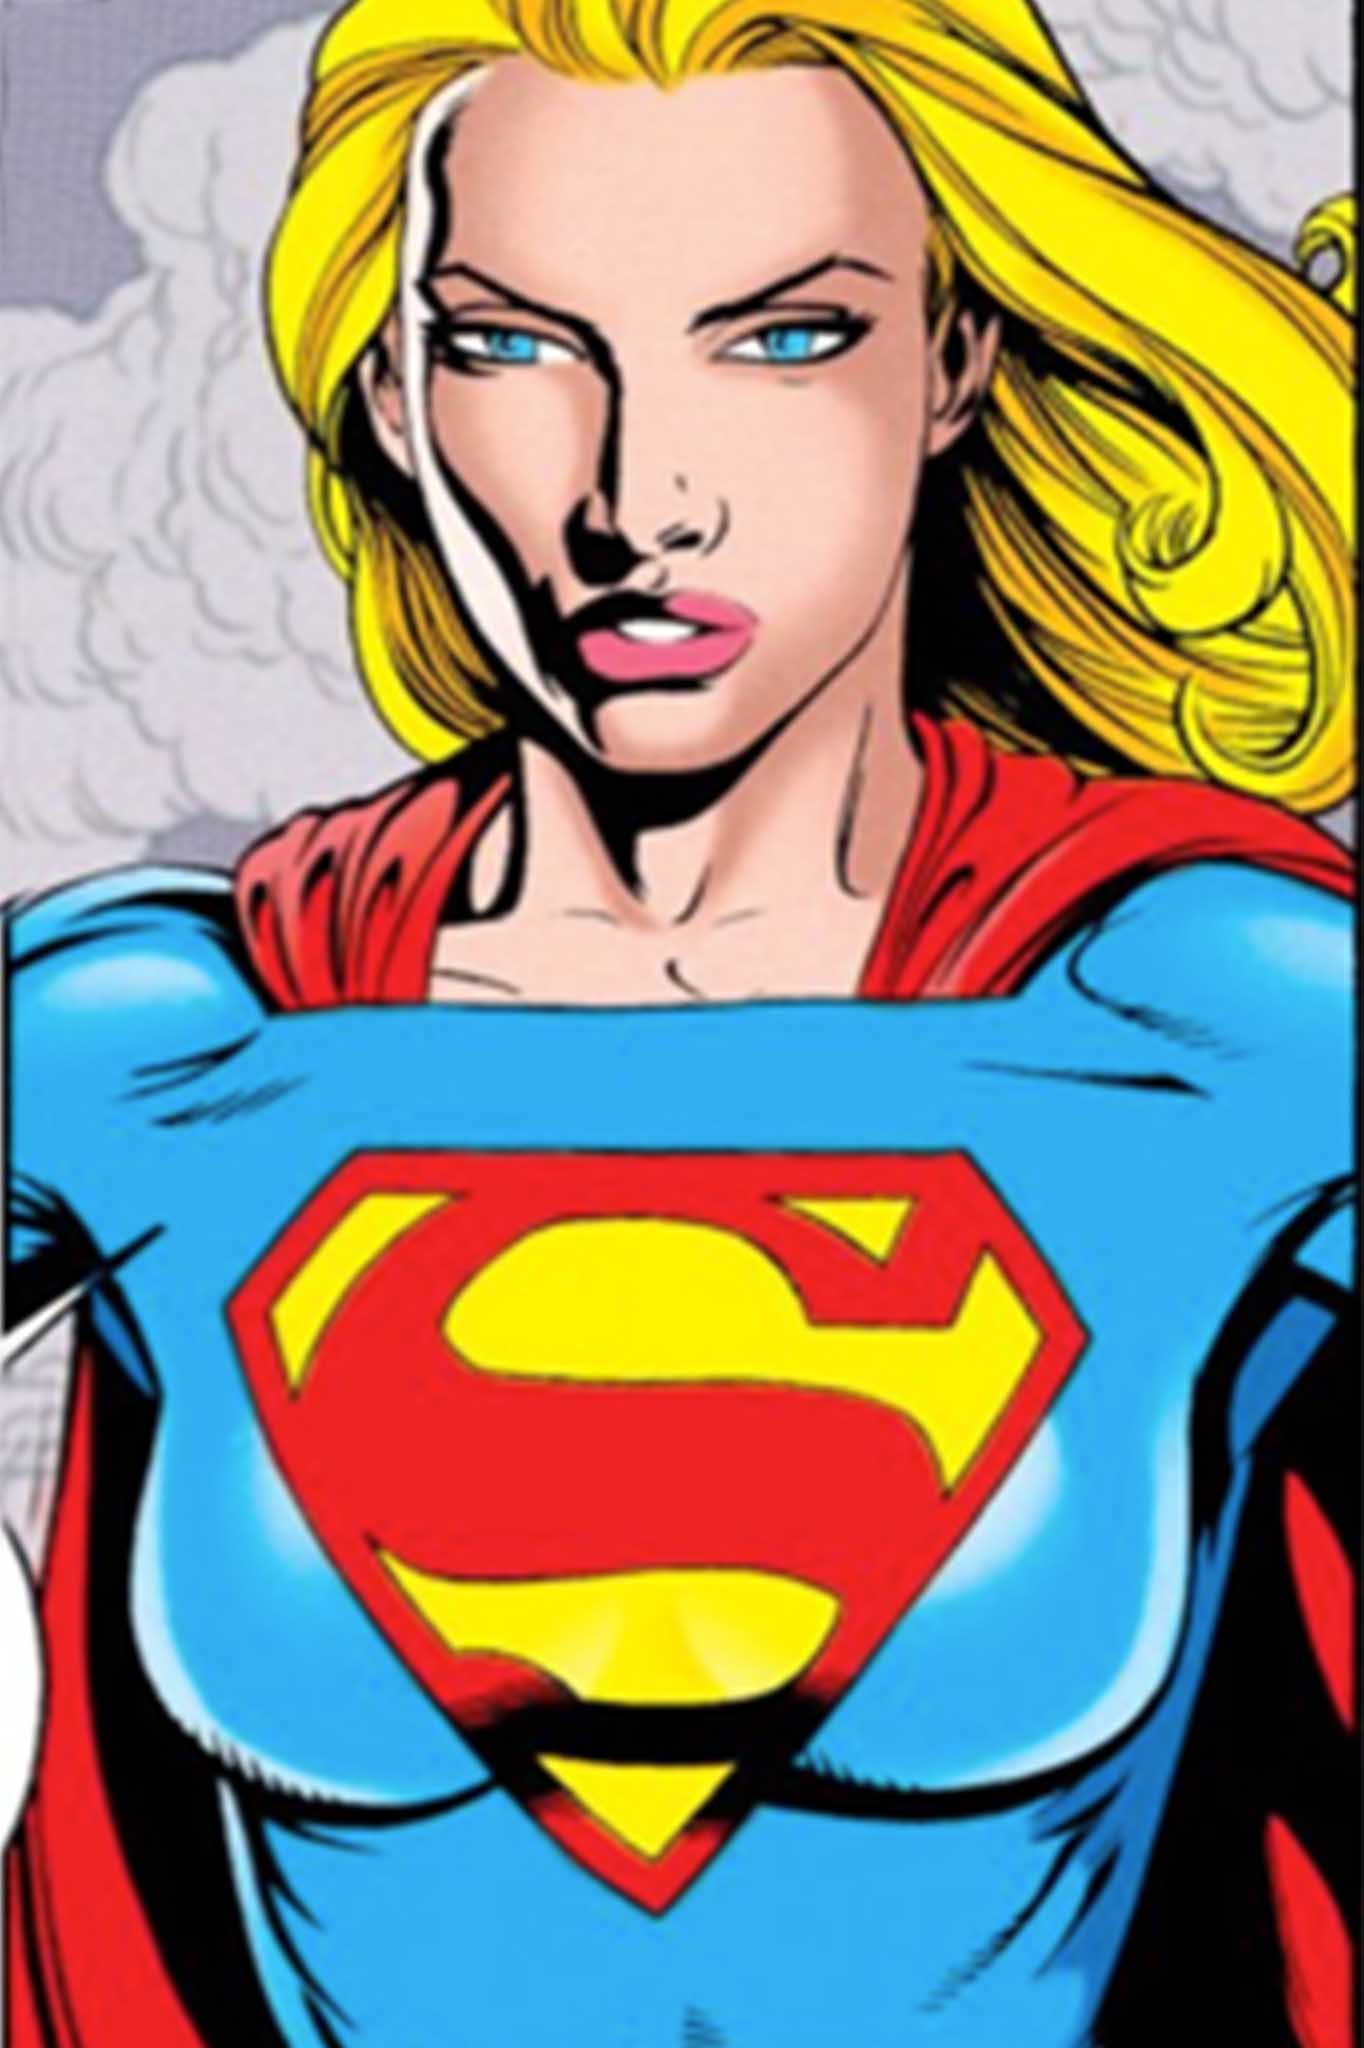 Supergirl by Gary Frank2.jpg